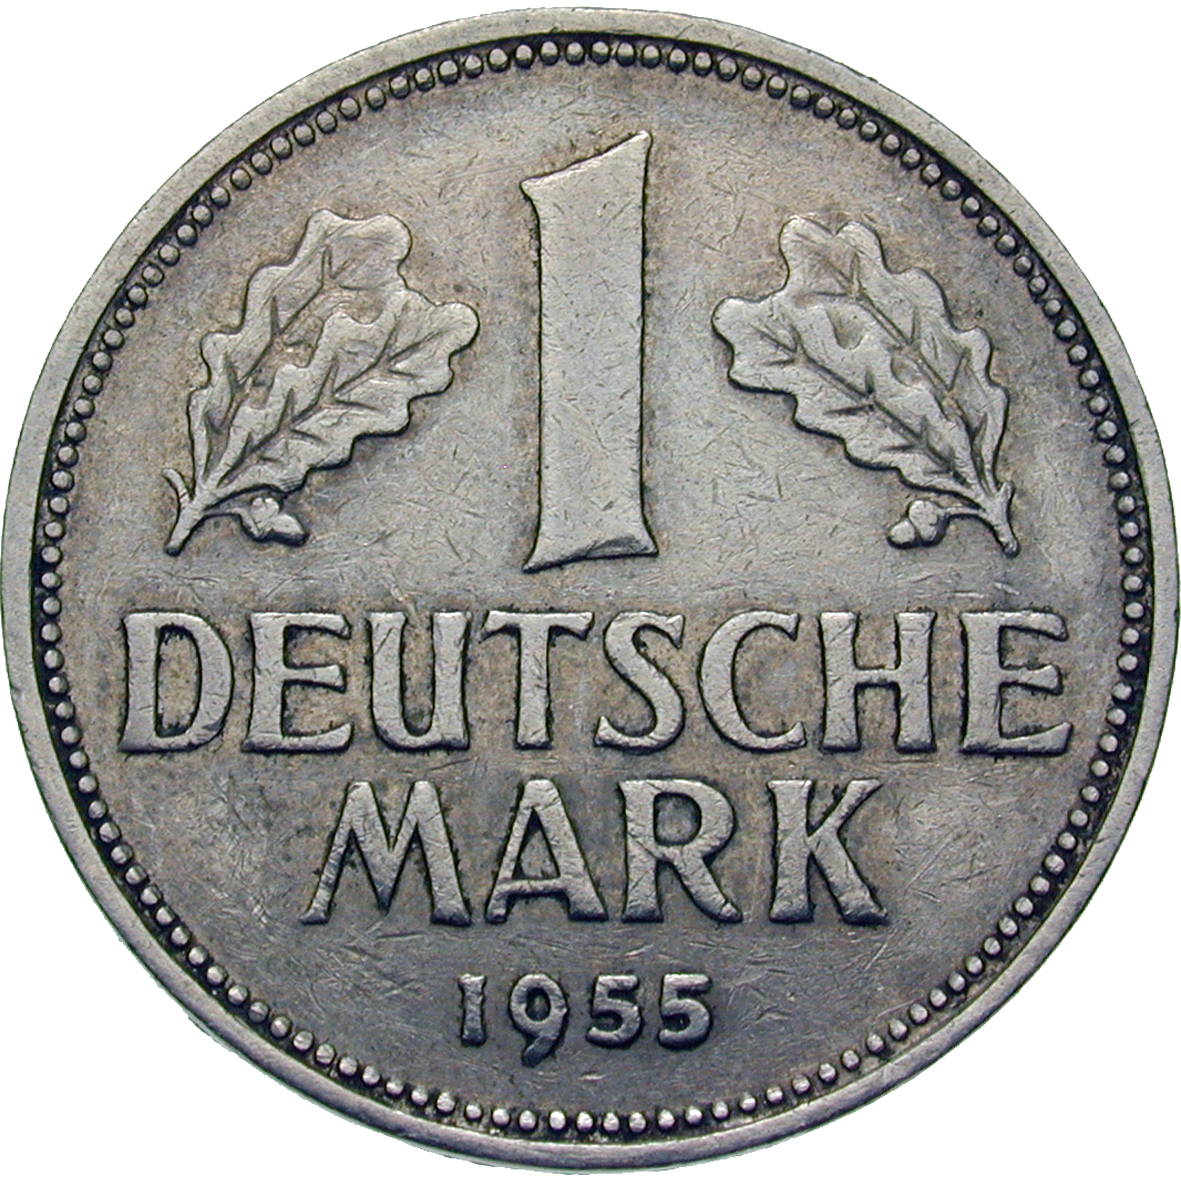 Federal Republic of Germany, 1 Deutsche Mark 1955 (reverse)